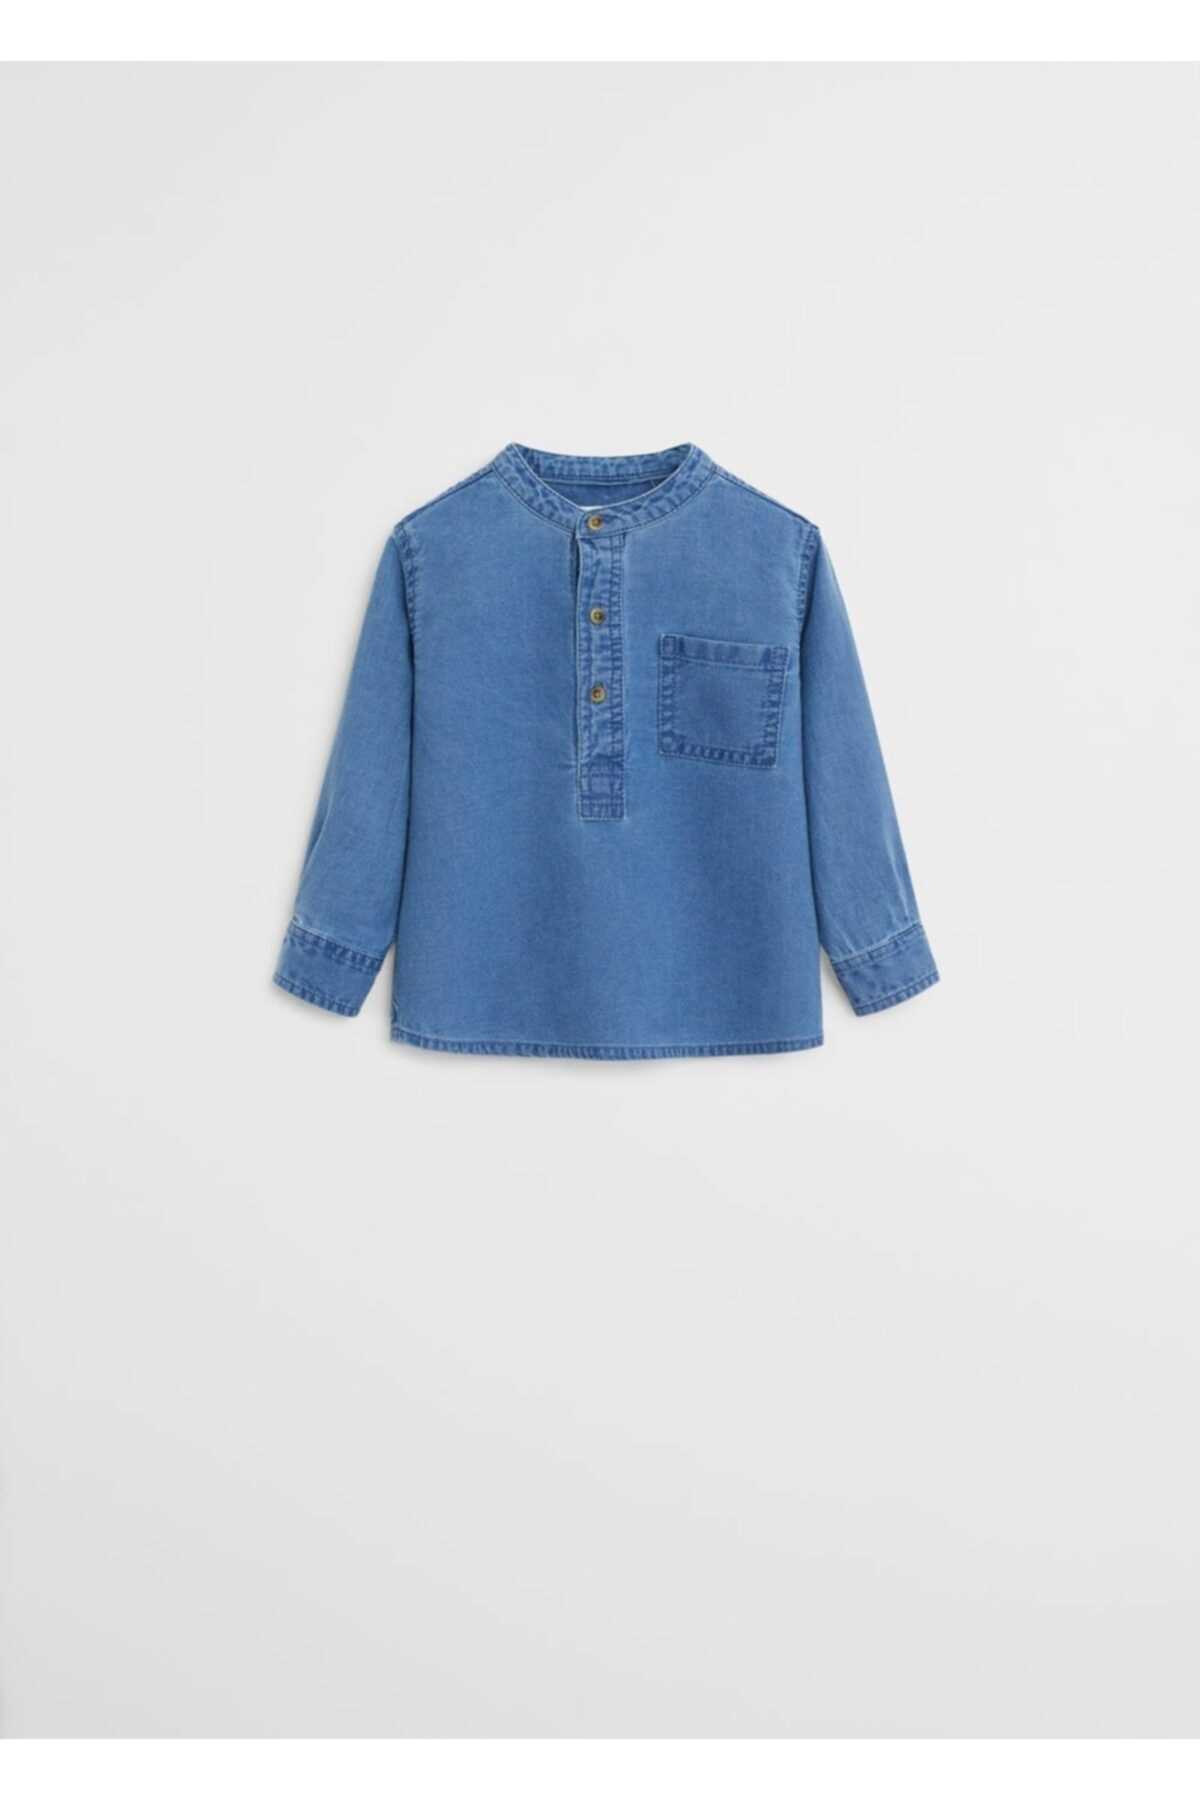 پیراهن نوزاد پسر ارزان برند منگو رنگ آبی کد ty37116841